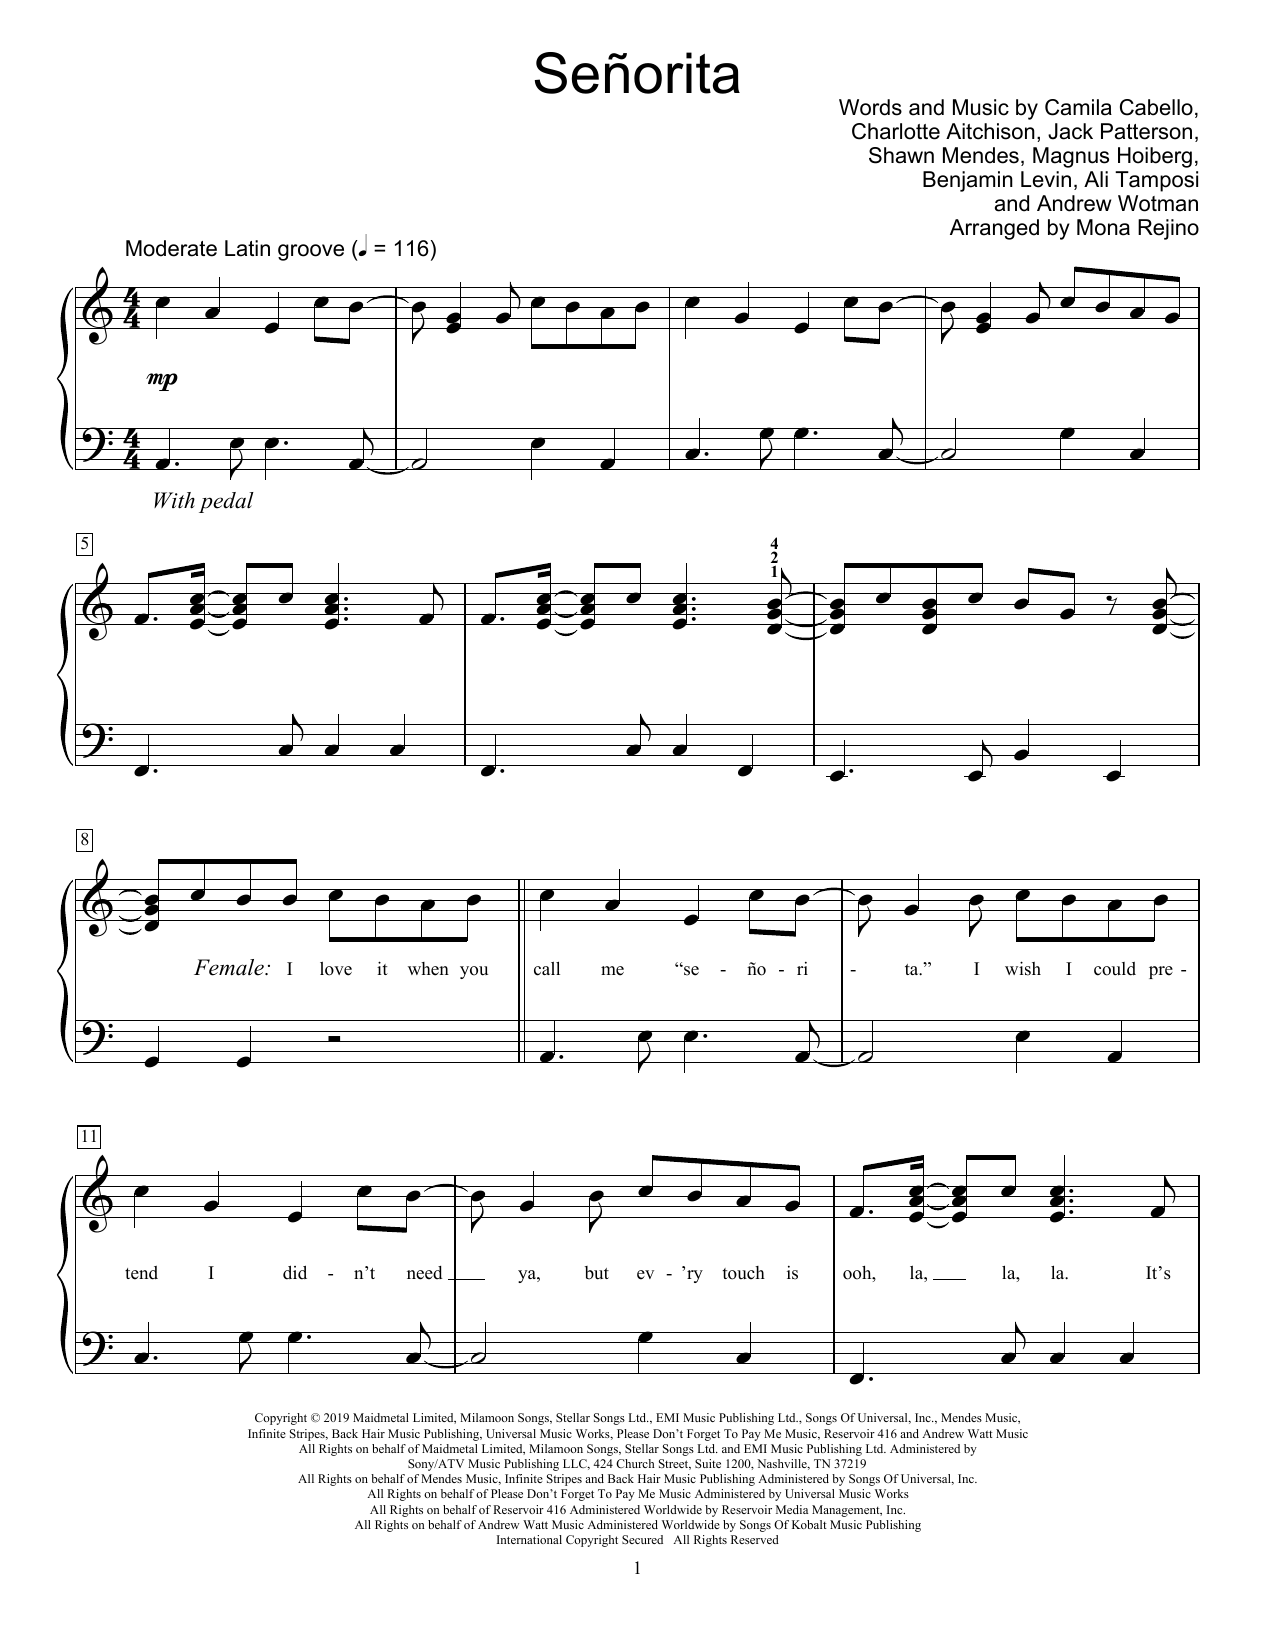 Shawn Mendes & Camila Cabello Señorita (arr. Mona Rejino) Sheet Music Notes & Chords for Educational Piano - Download or Print PDF